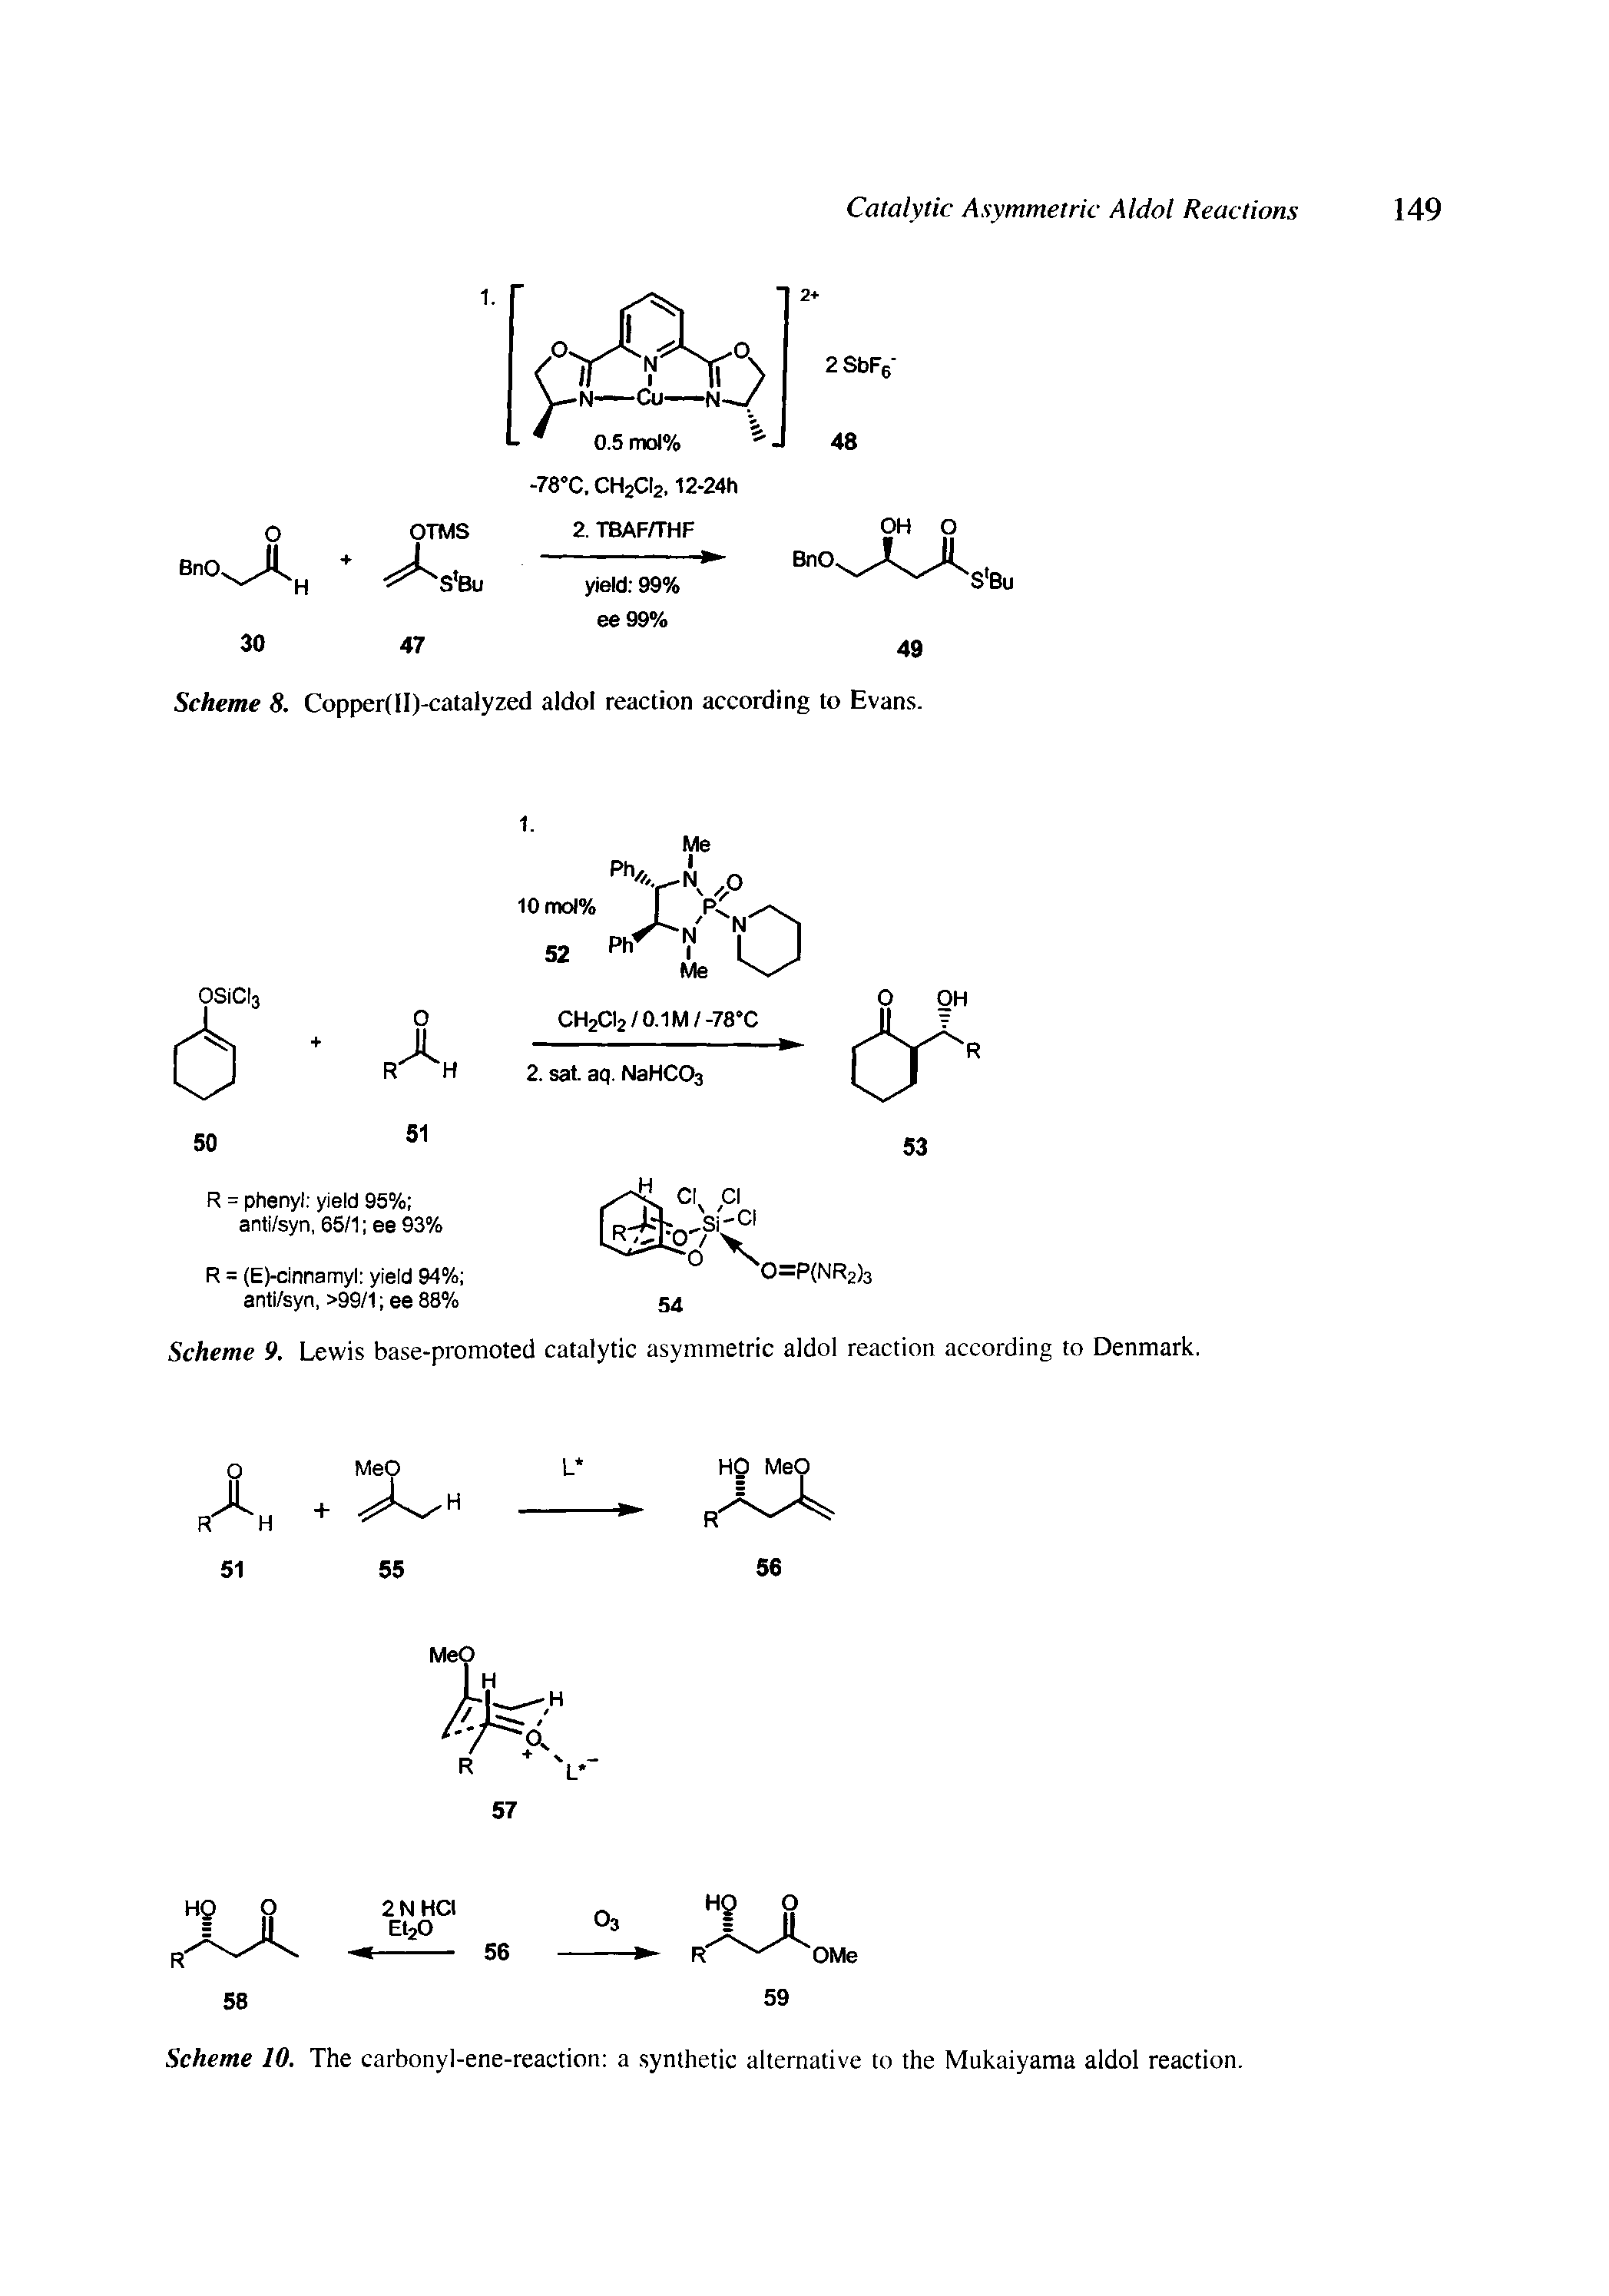 Scheme 9. Lewis base-promoted catalytic asymmetric aldol reaction according to Denmark.